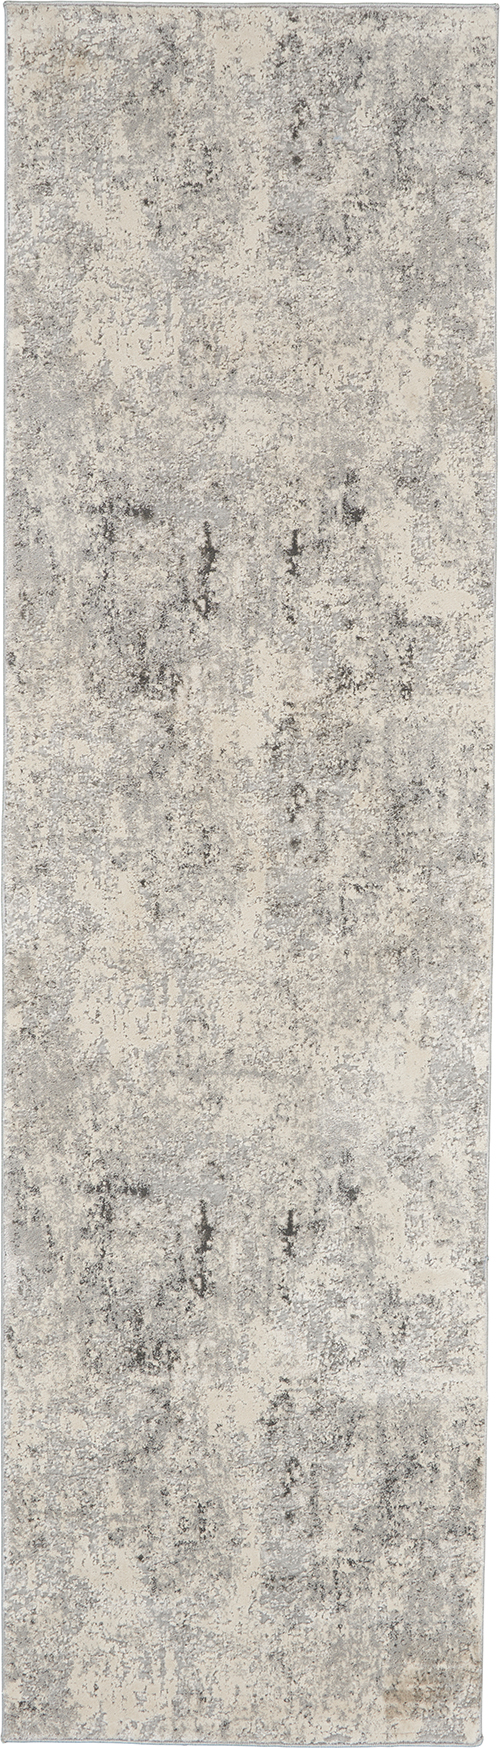 Nourison Rugs - Rustic Textures Runner RUS07 Rug in Grey / Beige - 2.3m x 0.66m